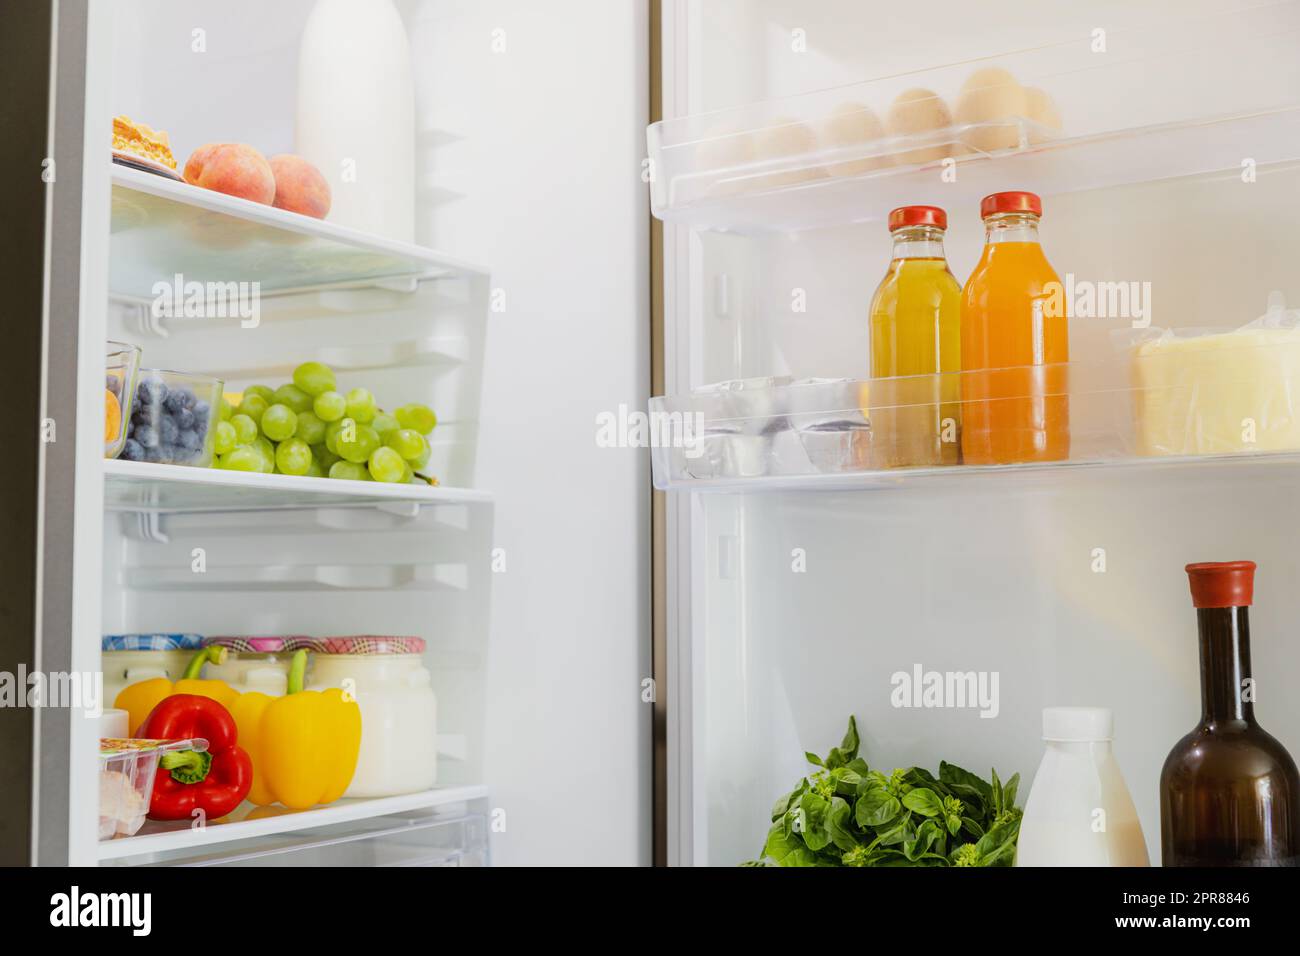 https://c8.alamy.com/comp/2PR8846/open-fridge-or-refrigerator-door-filled-with-fresh-fruits-and-vegetables-2PR8846.jpg